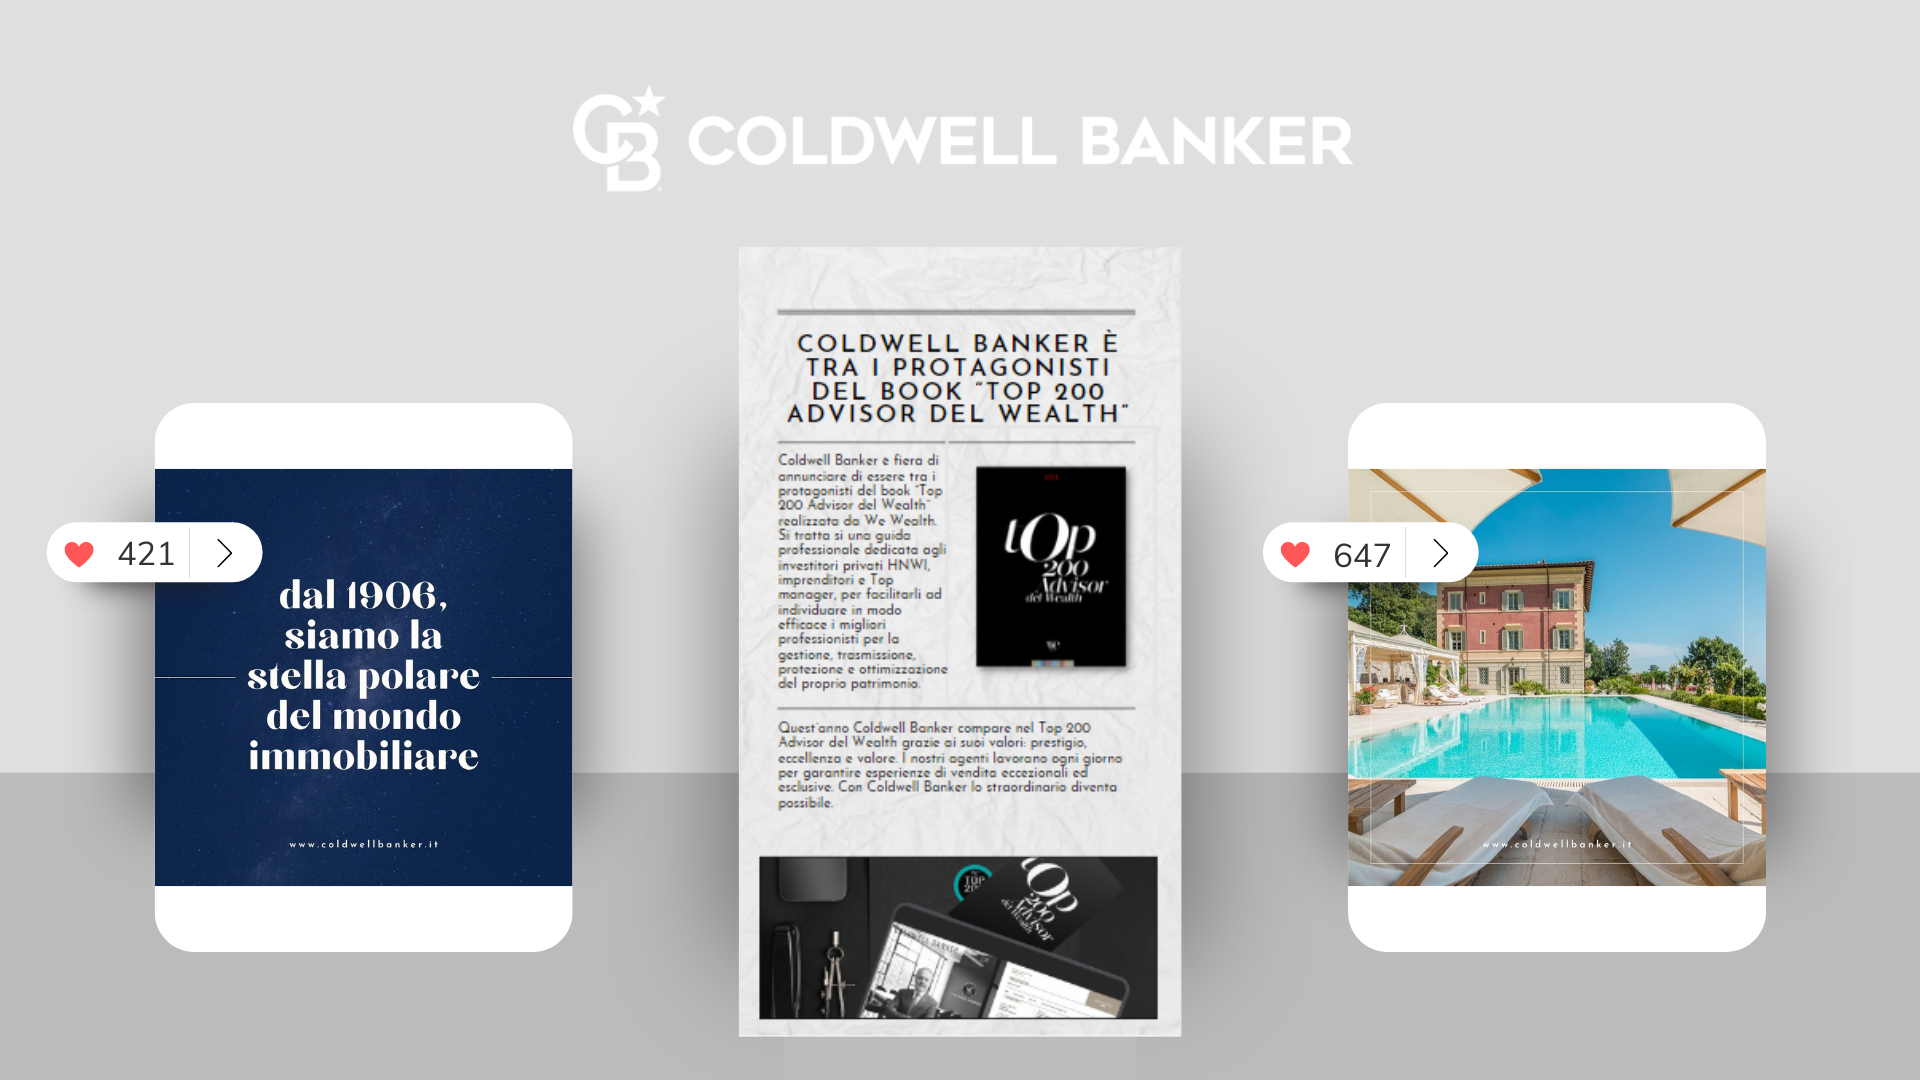 Coldwell banker - socia media management - 226lab marketing agency - Svizzera, canton ticino, Italia